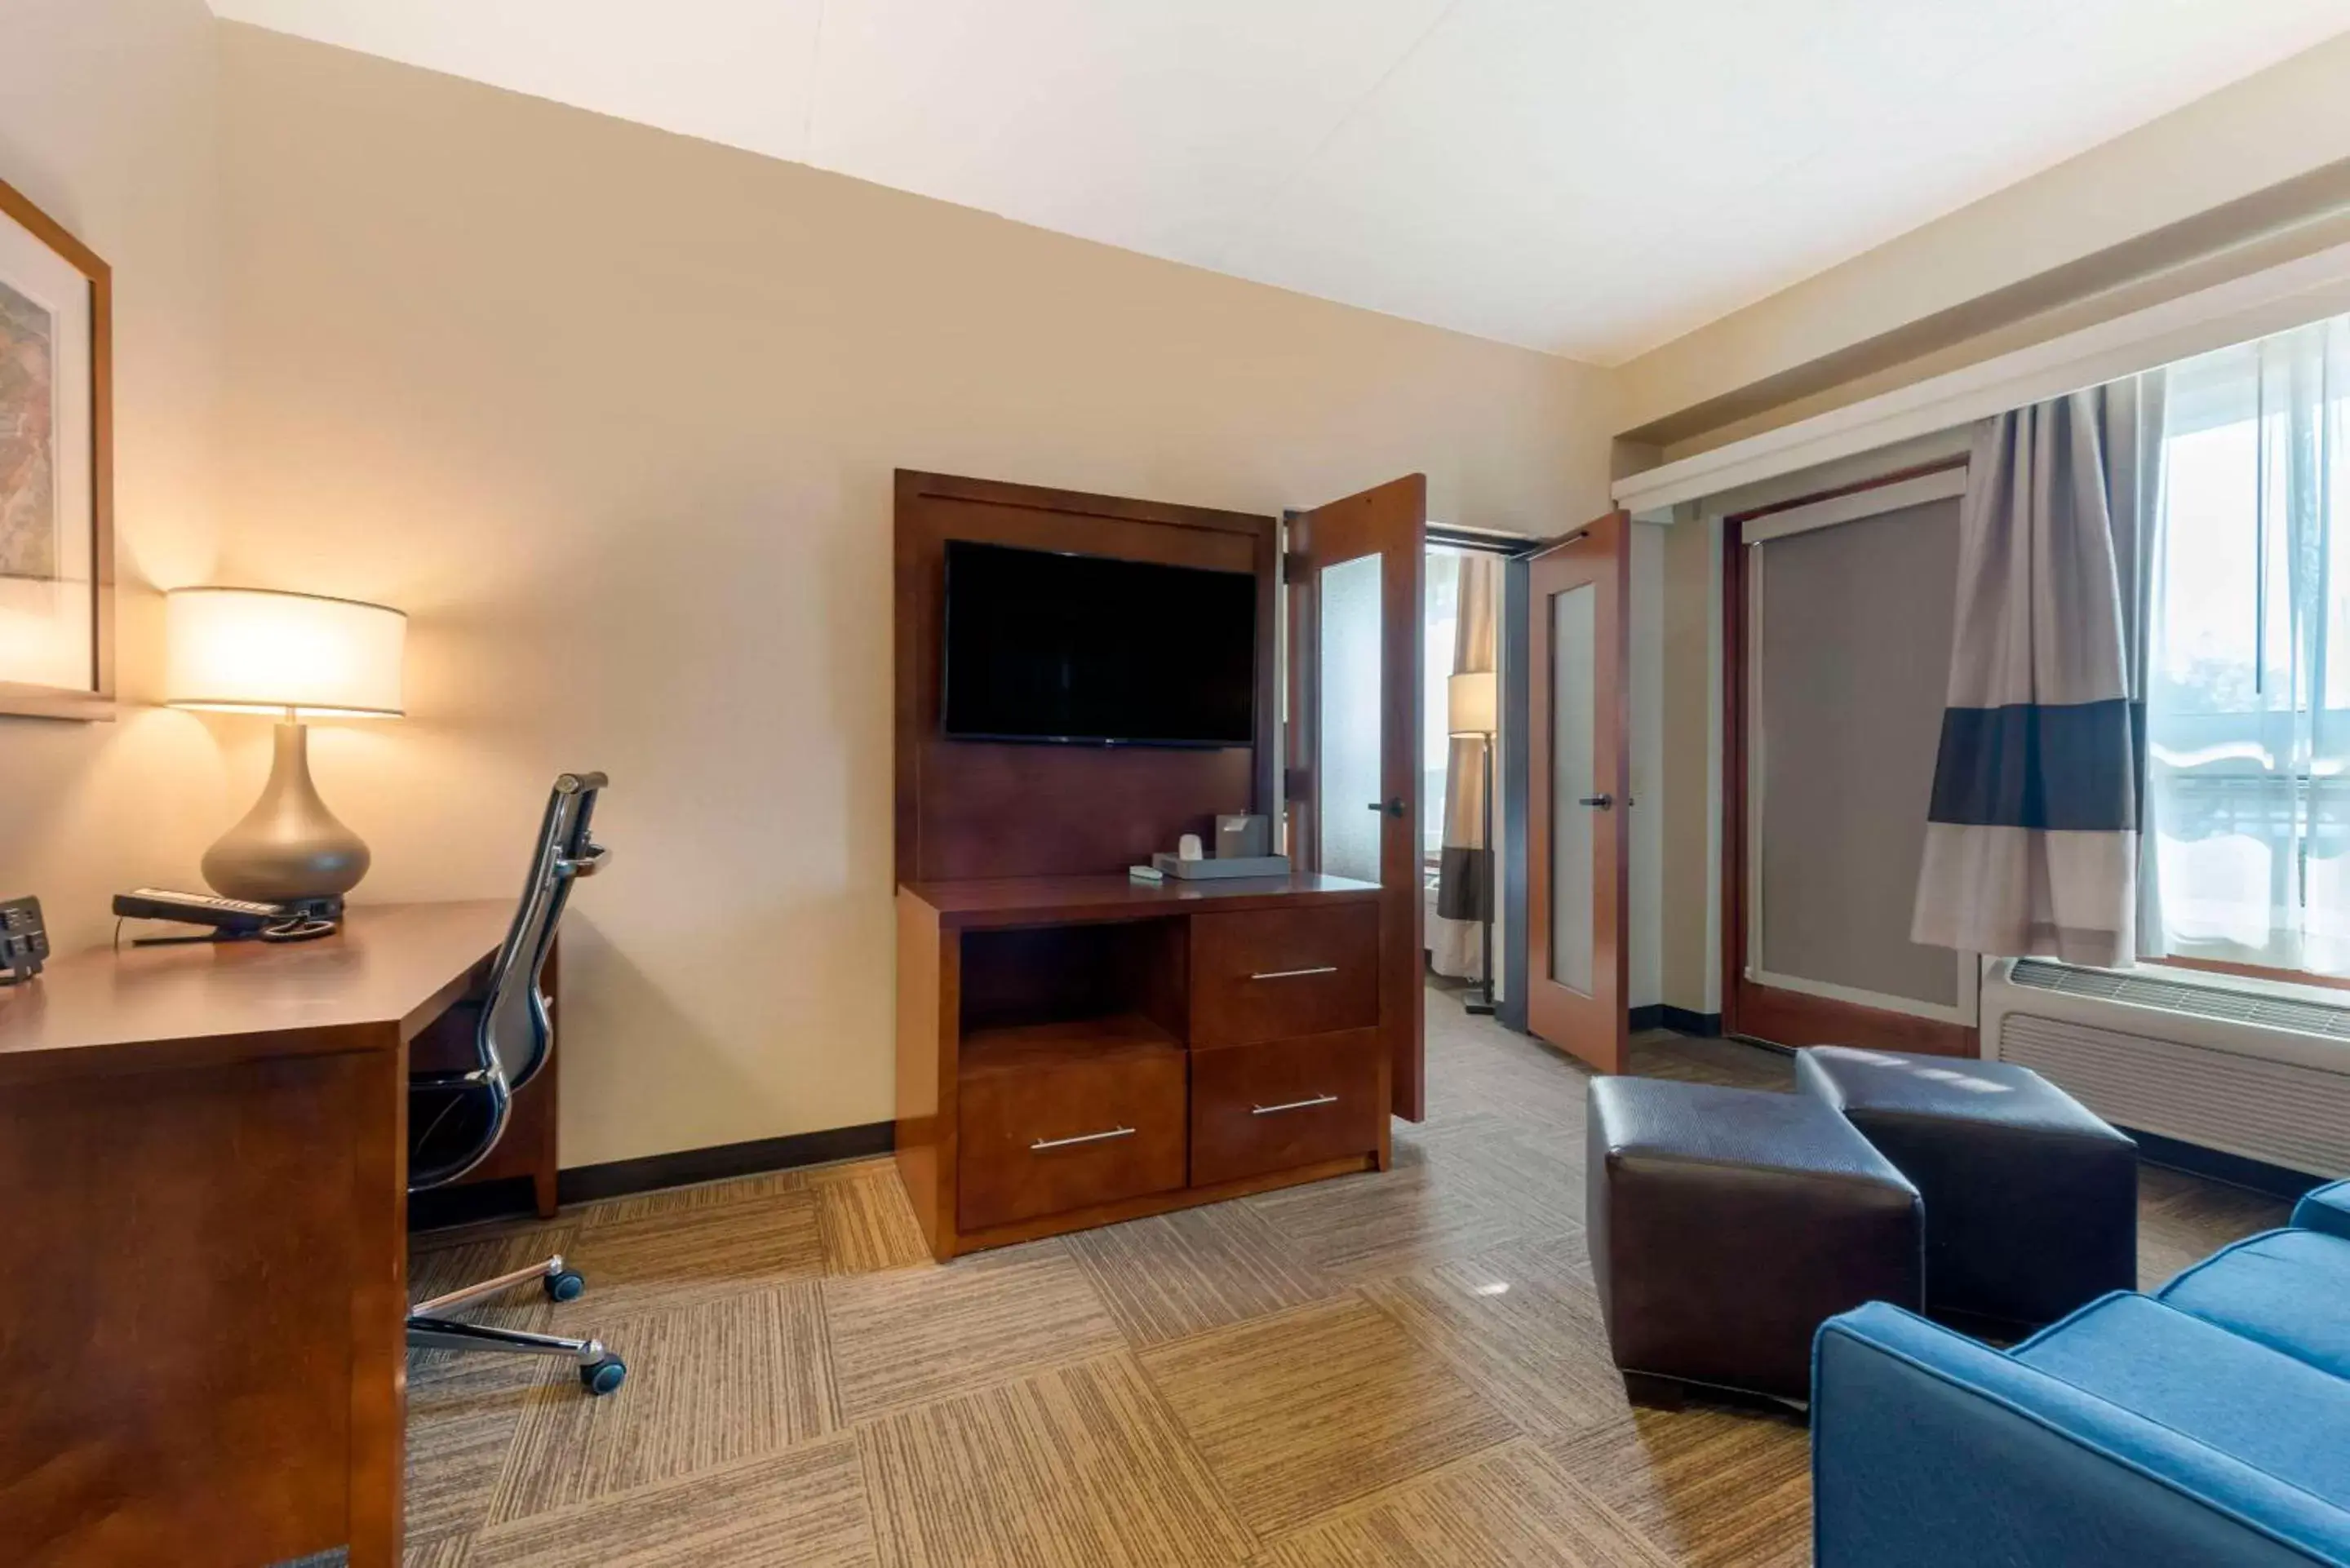 Bedroom, TV/Entertainment Center in Lift Bridge Lodge, Ascend Hotel Collection